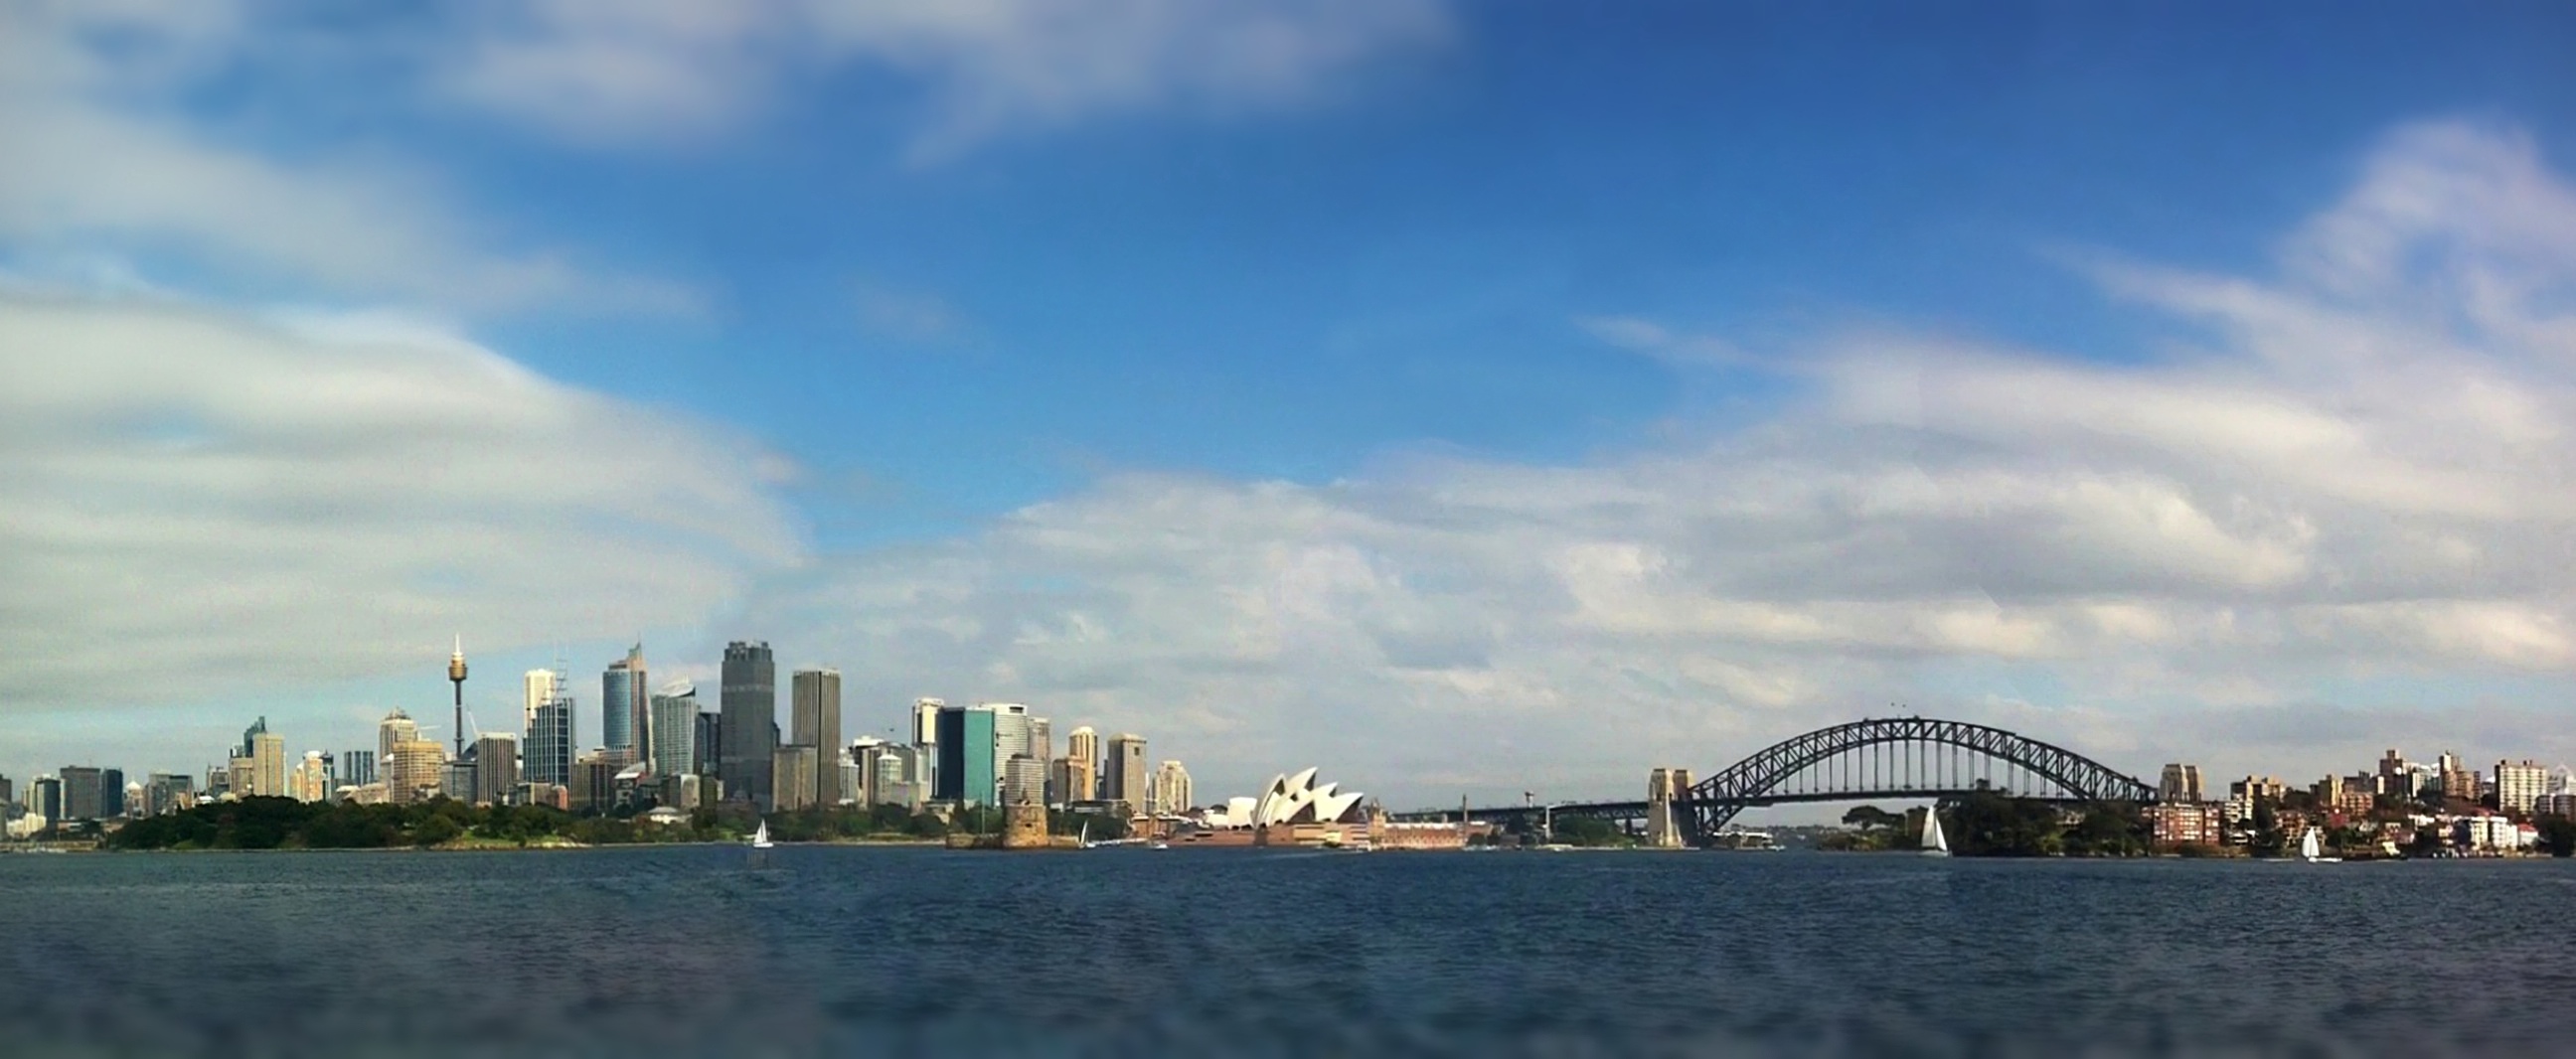 Day 359 – Sydney Harbour